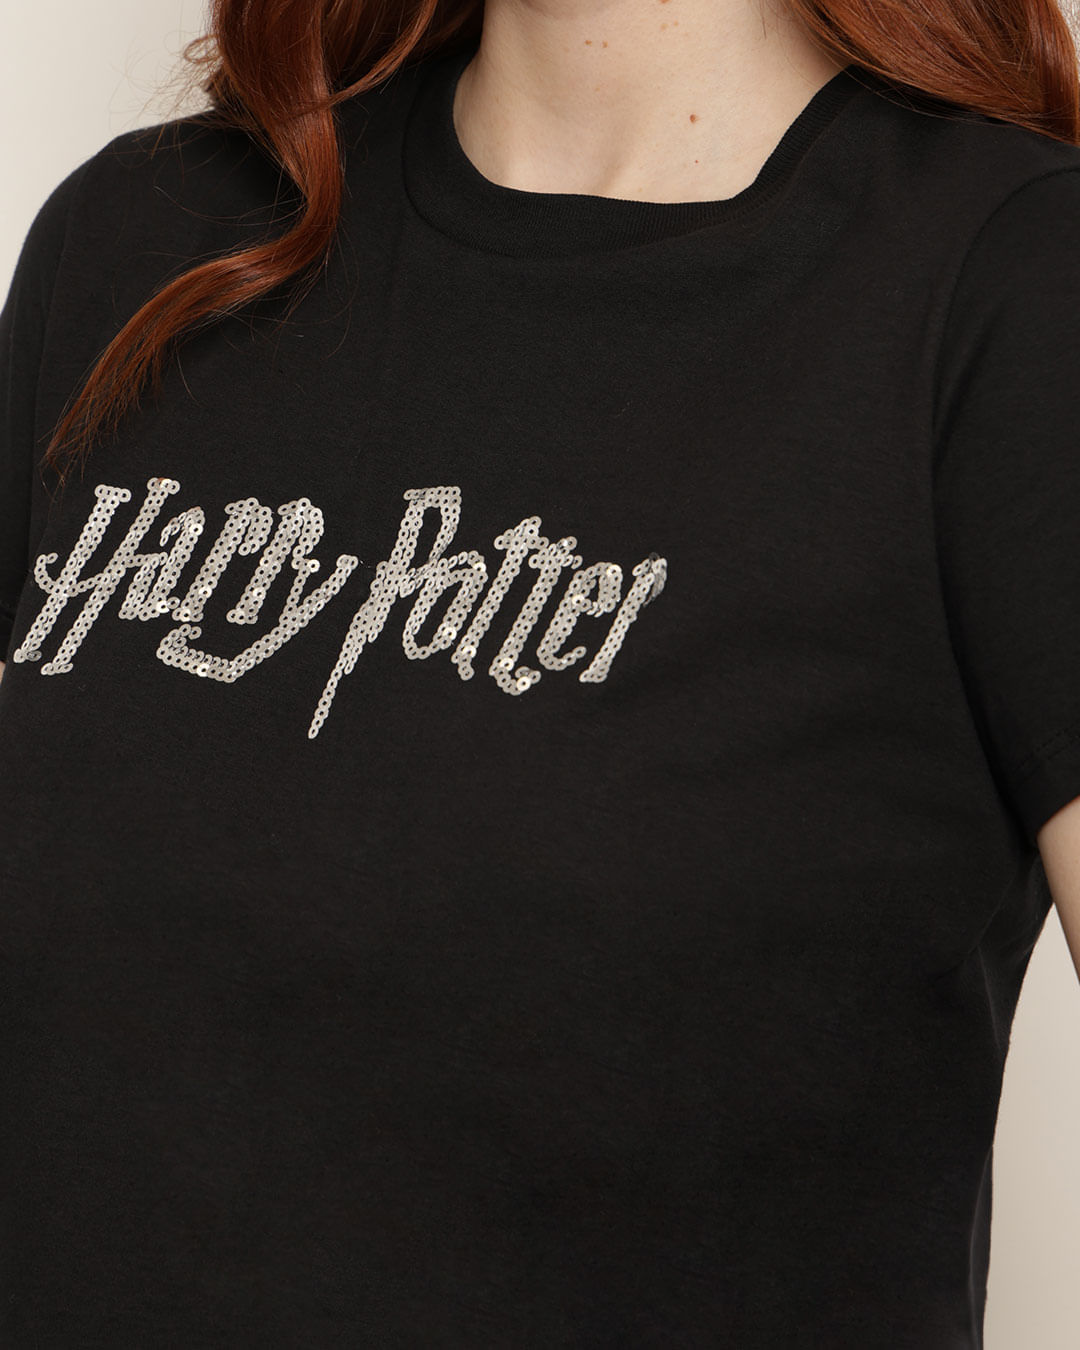 Camiseta-Mc-Harry-Potter-30060063---Preto